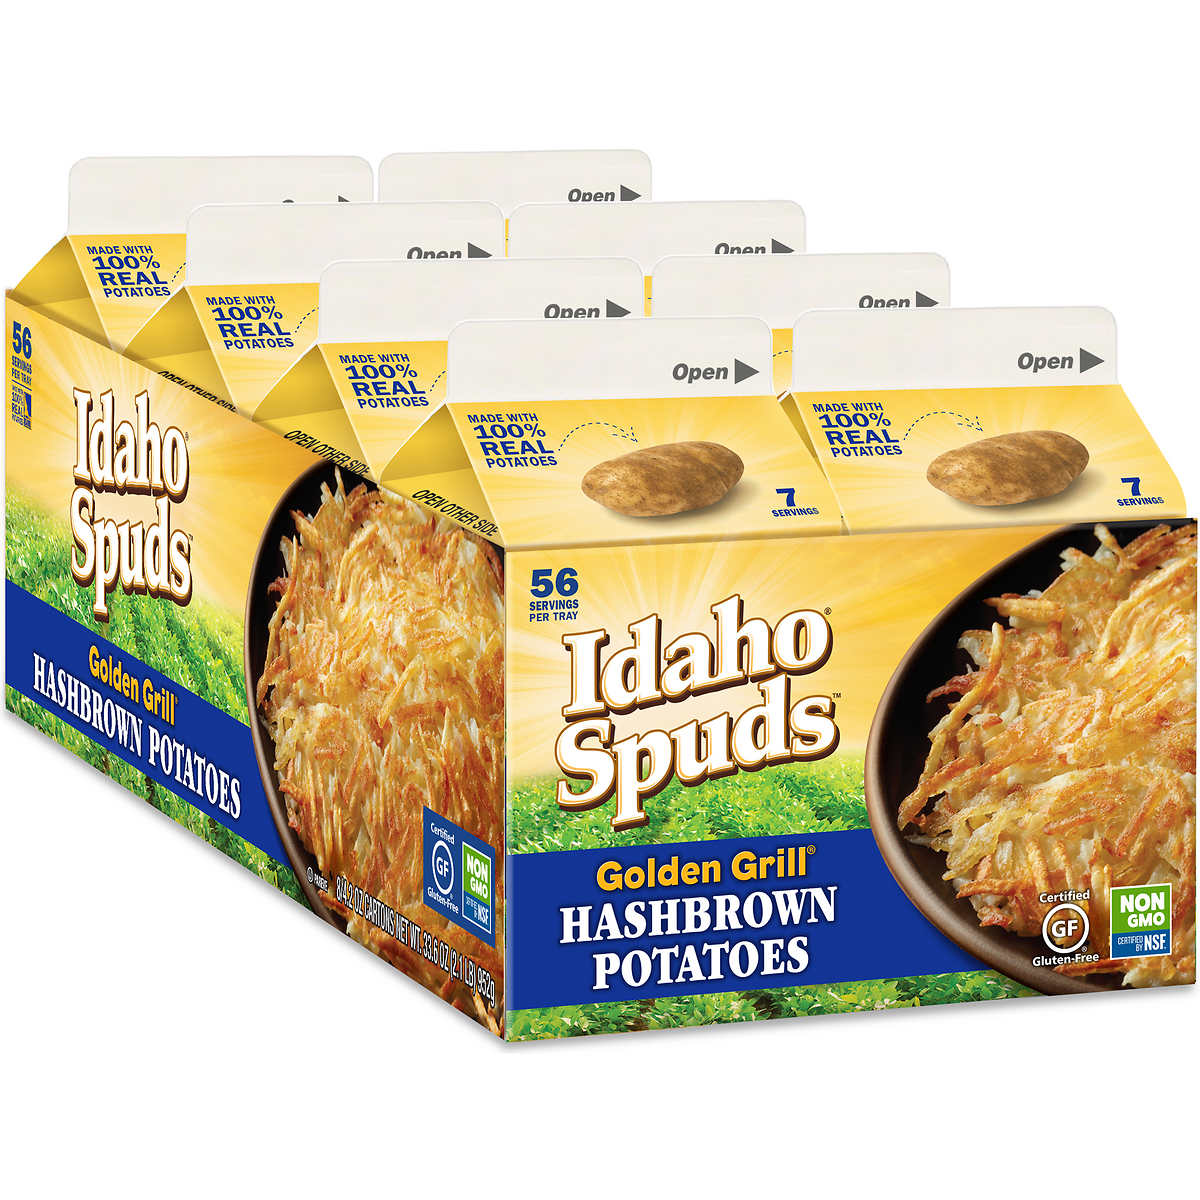 Idaho Spuds Hashbrown Potatoes 4.2 oz, 8 Pack